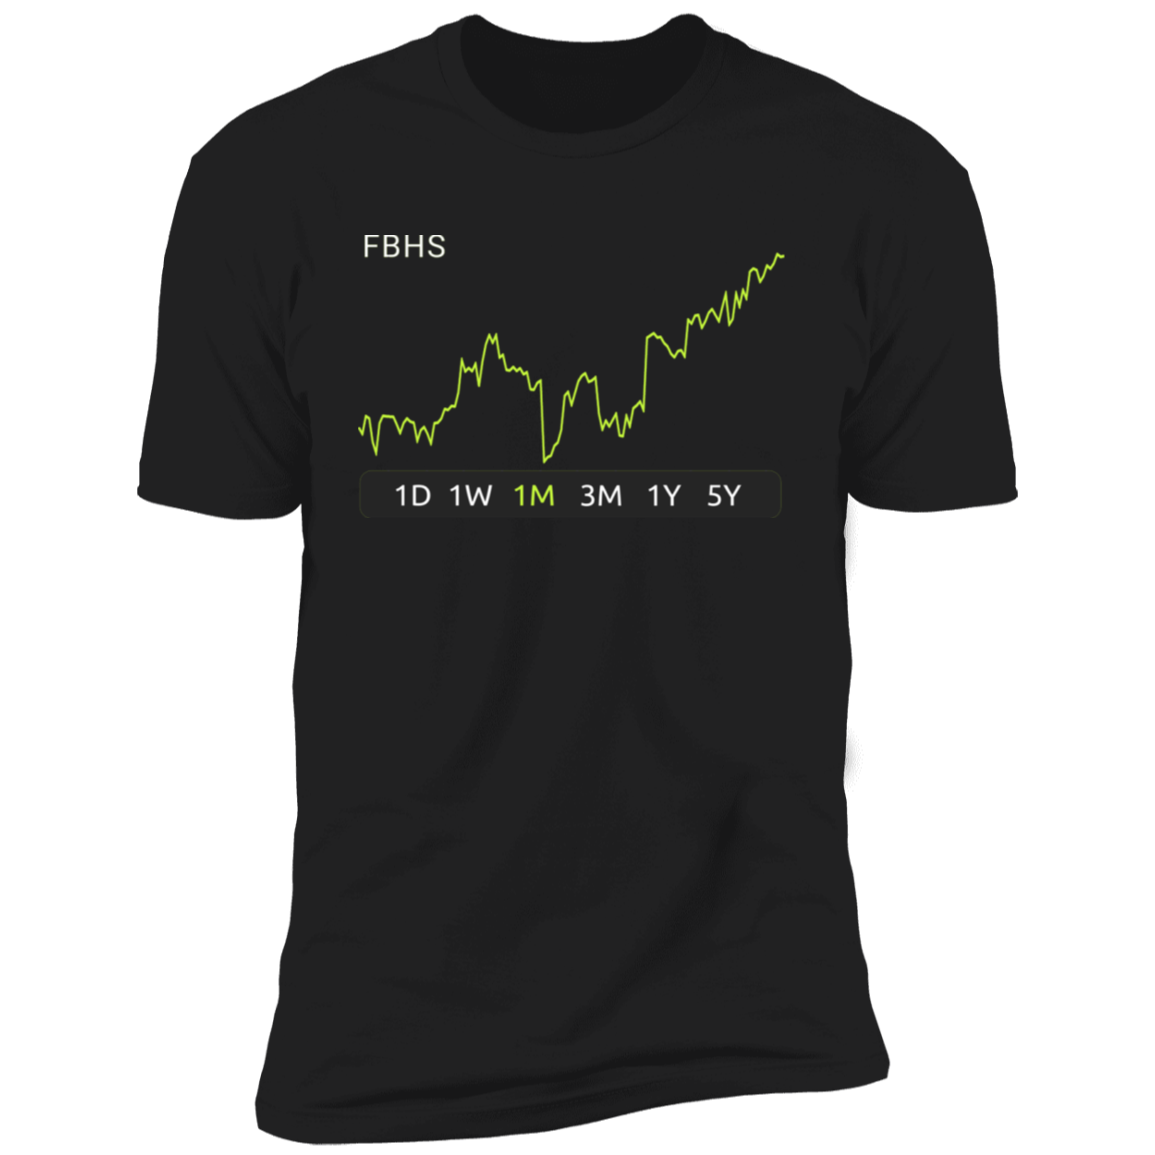 FBHS Stock 1m Premium T-Shirt